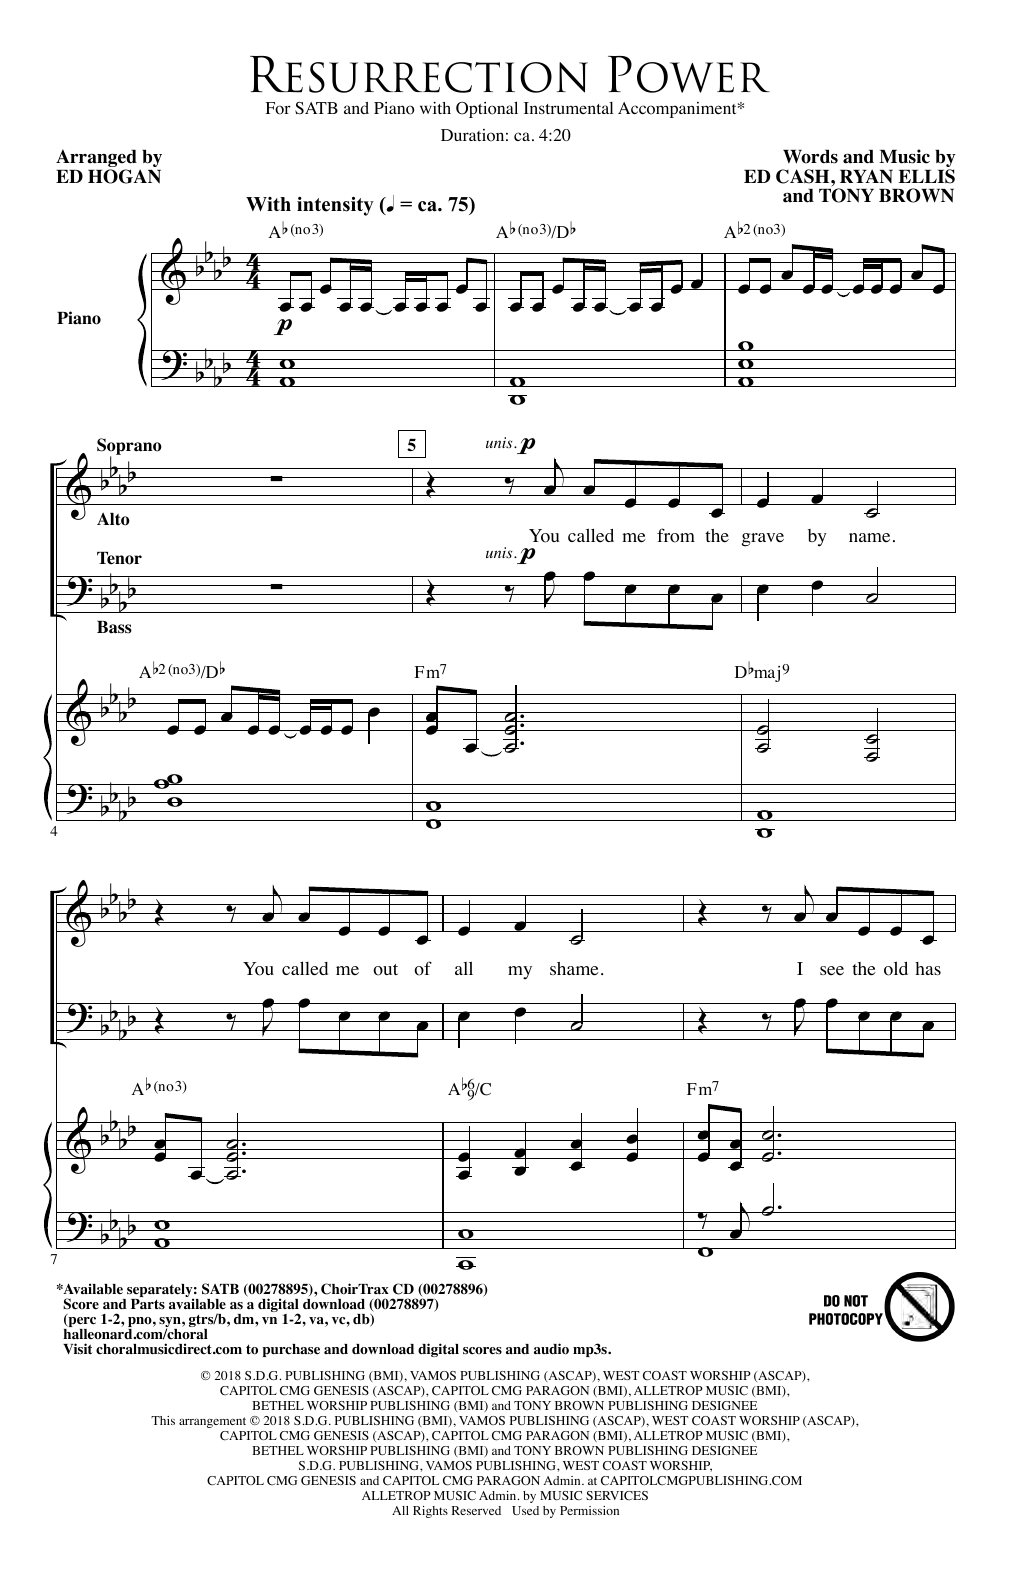 Download Ed Cash, Ryan Ellis & Tony Brown Resurrection Power (arr. Ed Hogan) Sheet Music and learn how to play SATB Choir PDF digital score in minutes